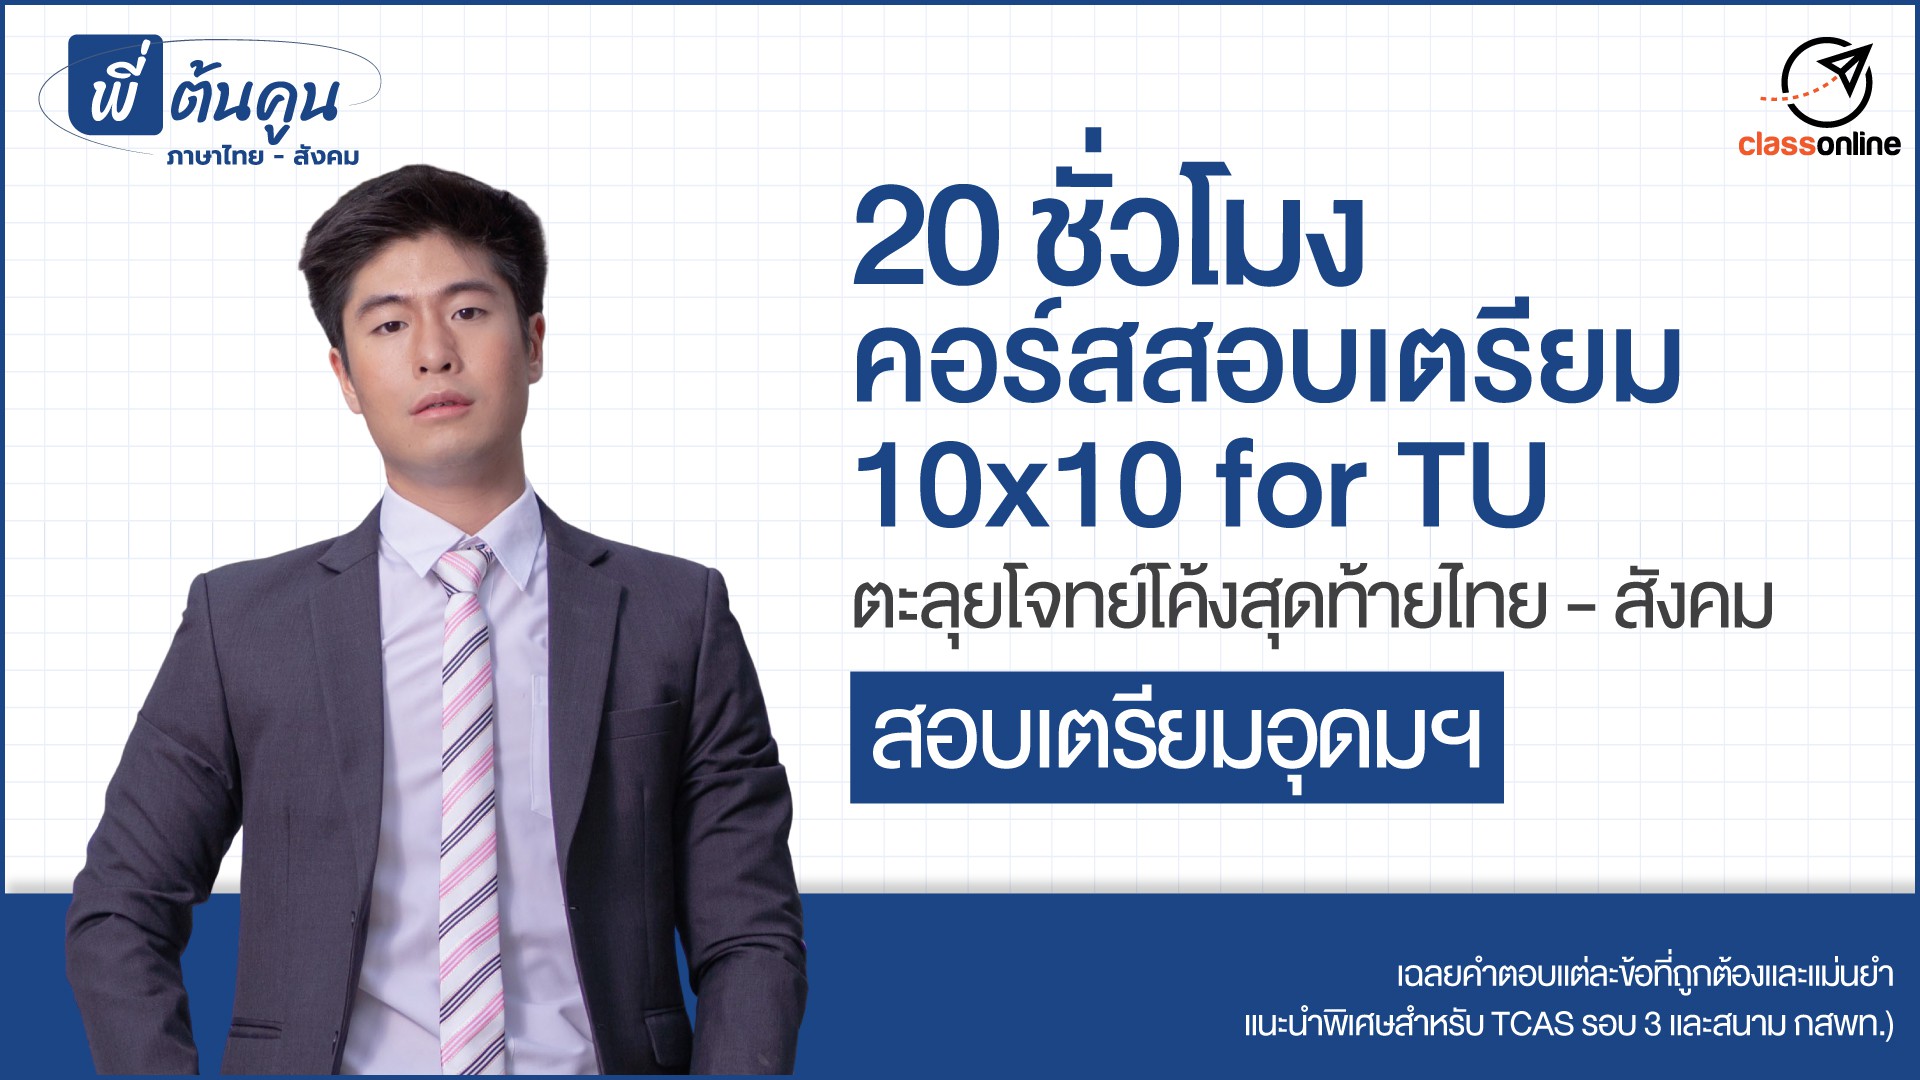 10x10 for TU ตะลุยโจทย์โค้งสุดท้ายไทย - สังคมเข้าเตรียมอุดมฯ